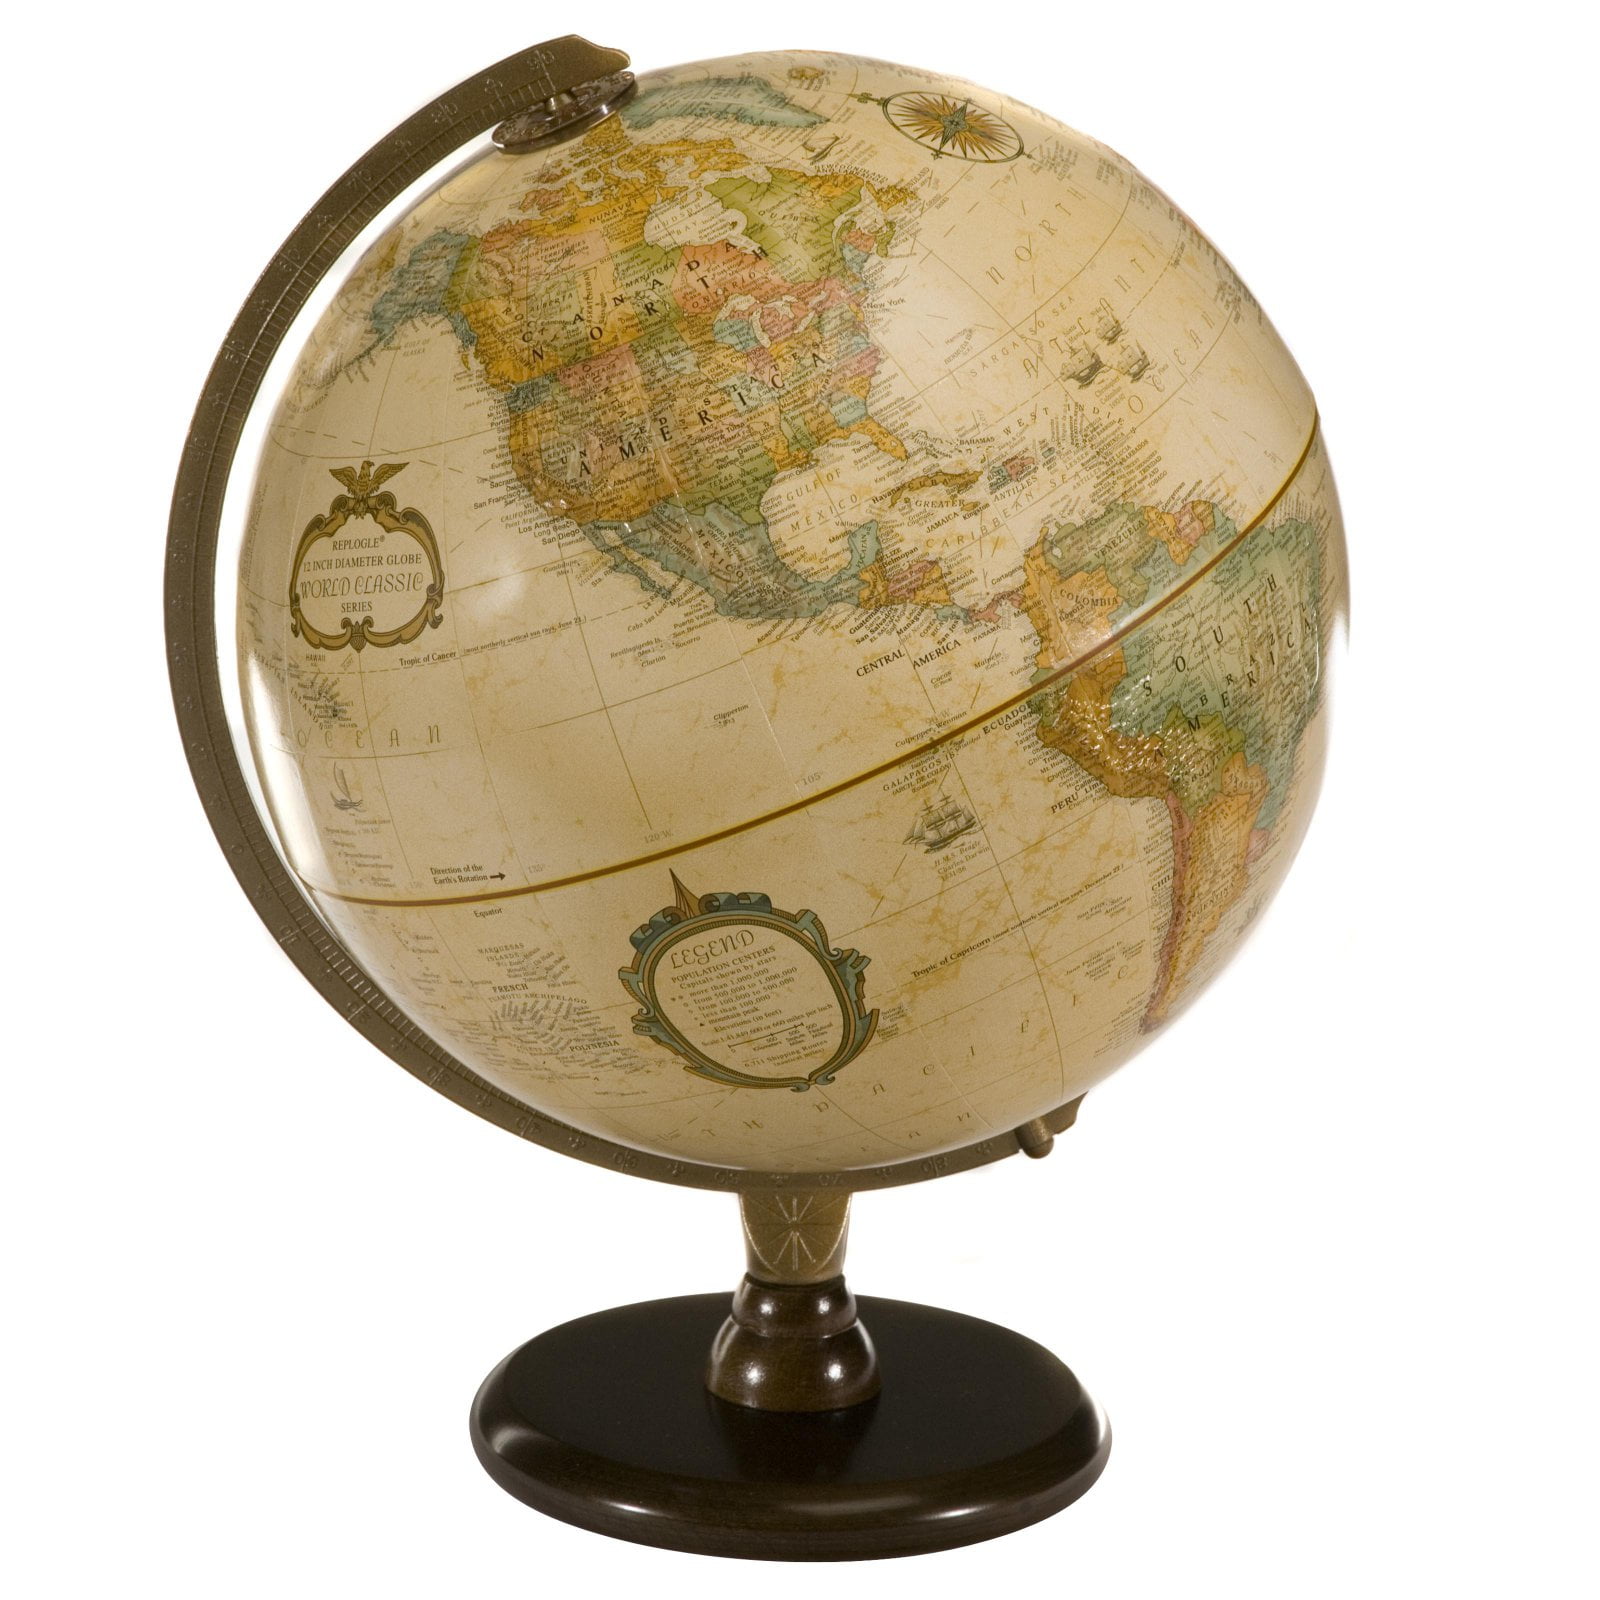 Grosvenor 12 Inch Desk World Globe By National Geographic 